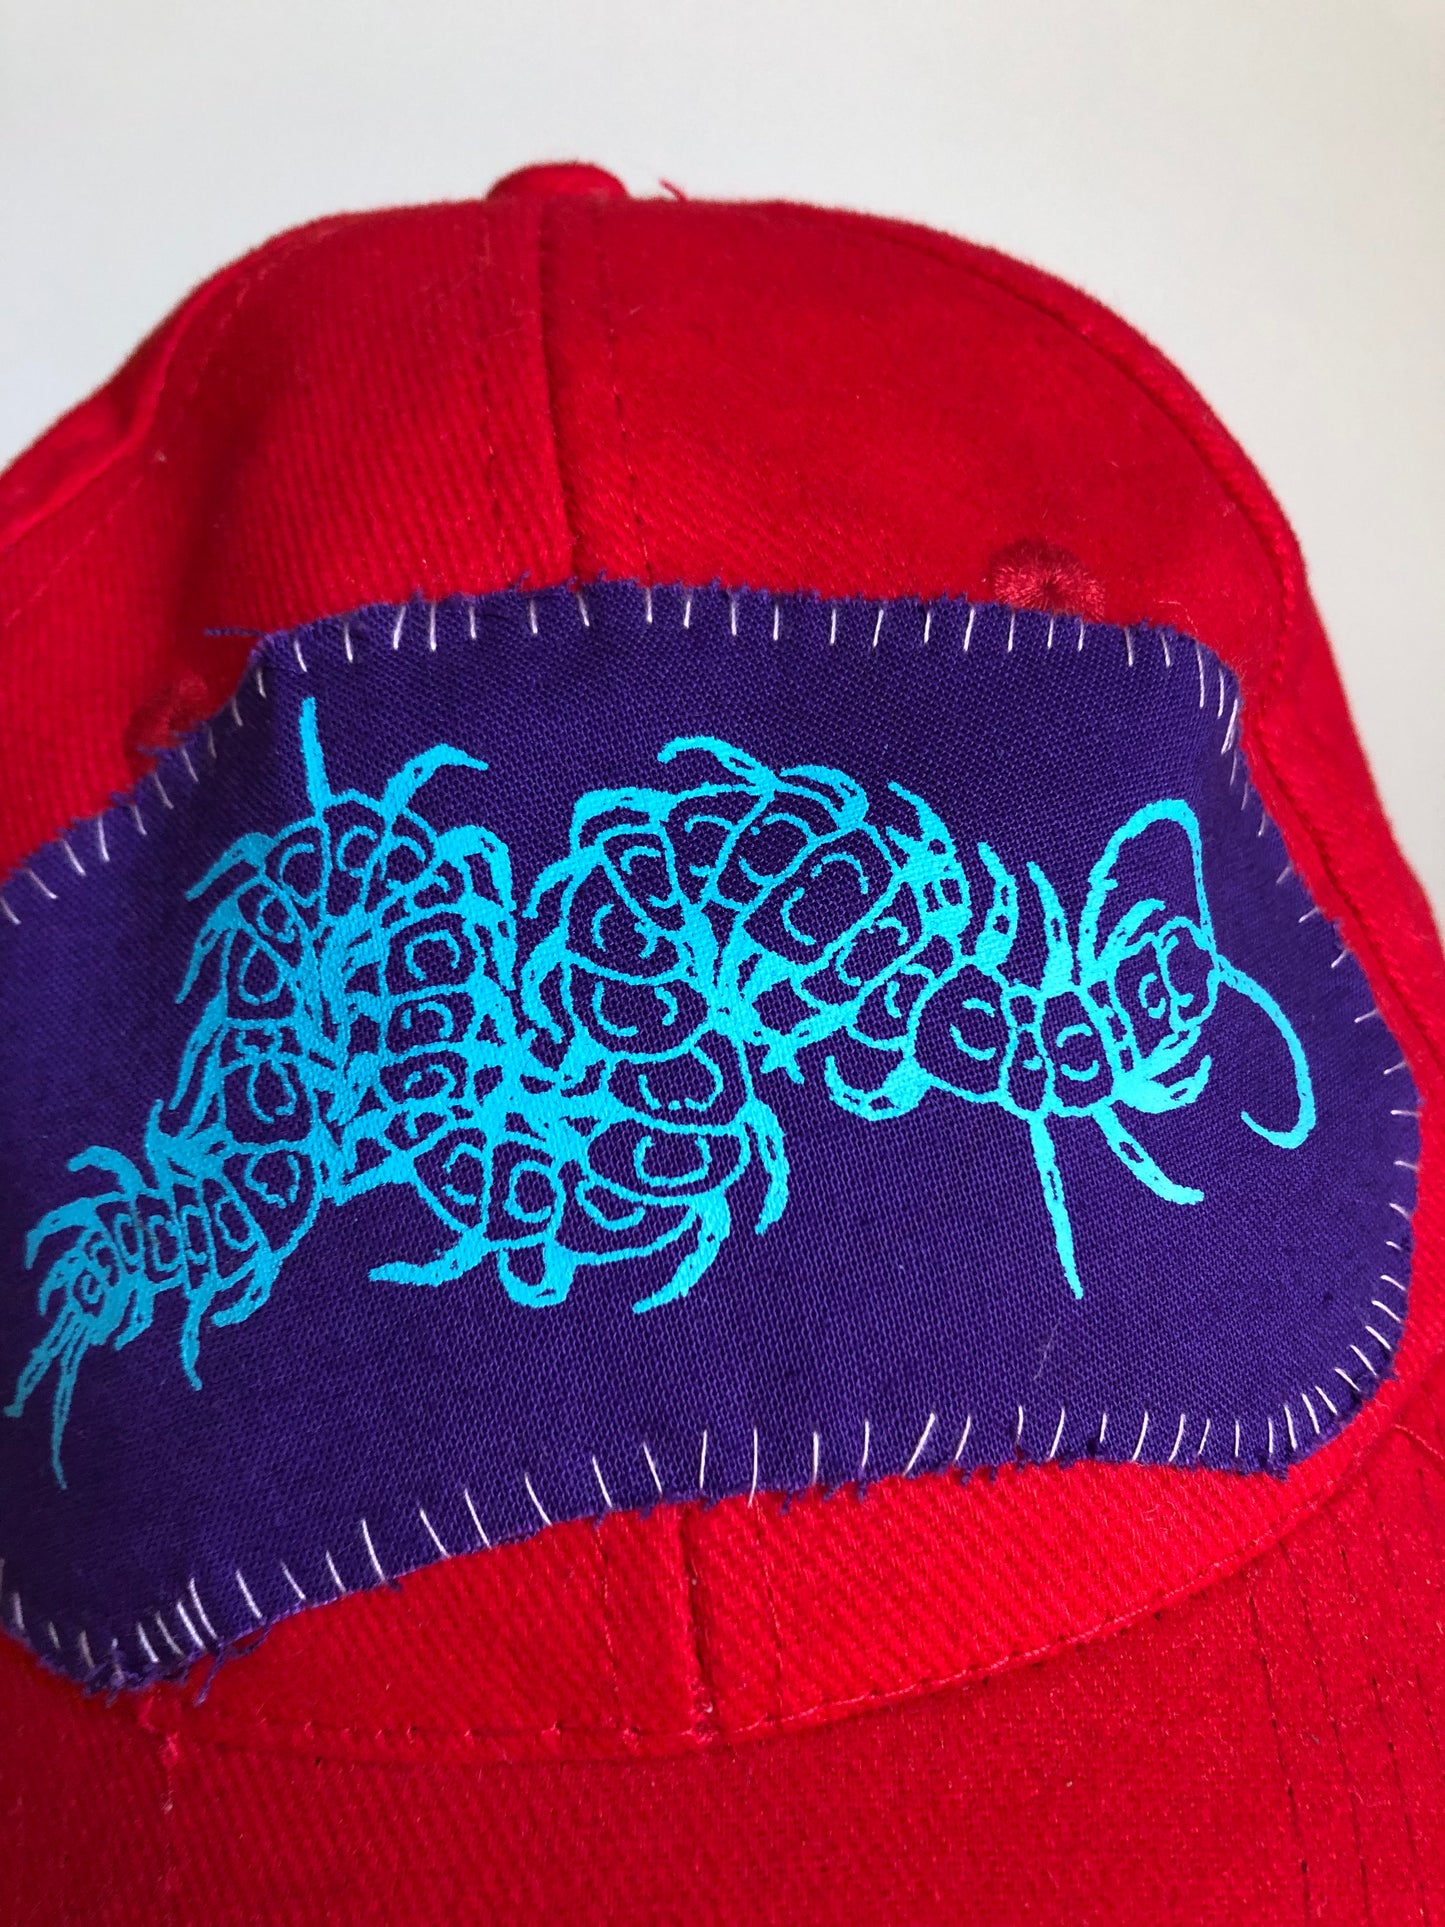 red cap (coiling centipede)